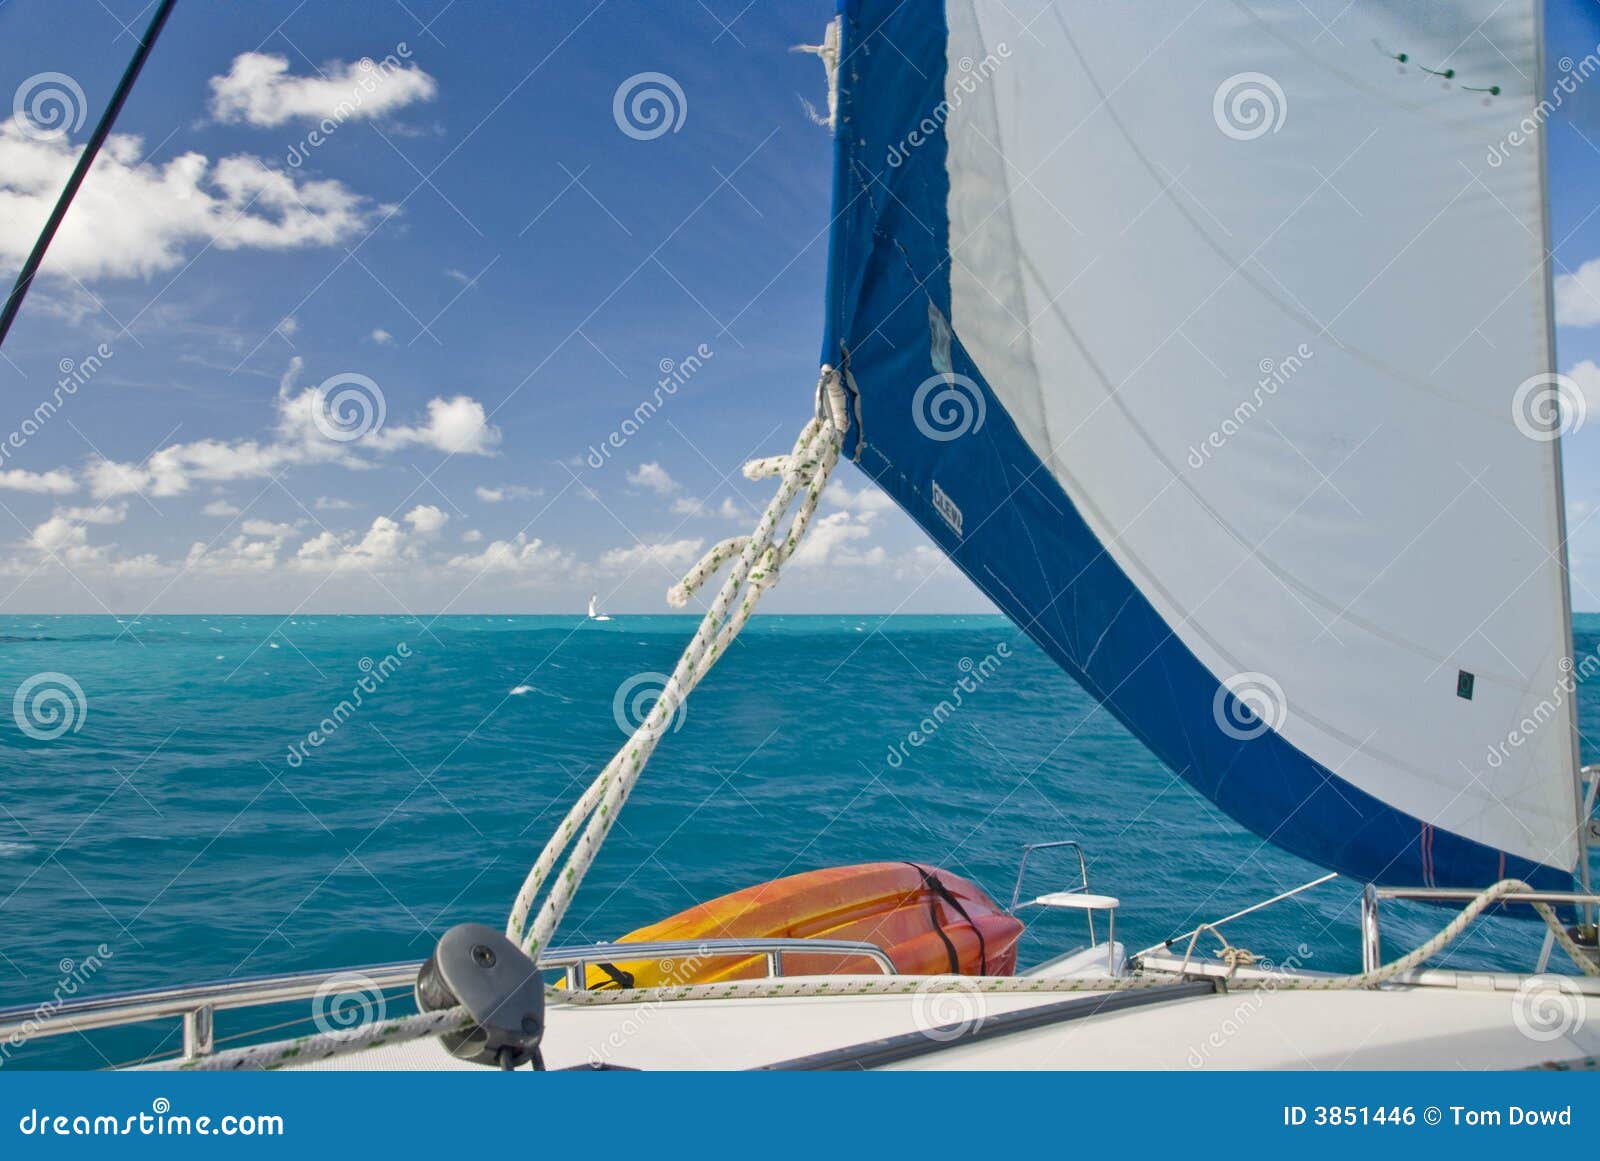 catamaran under sail